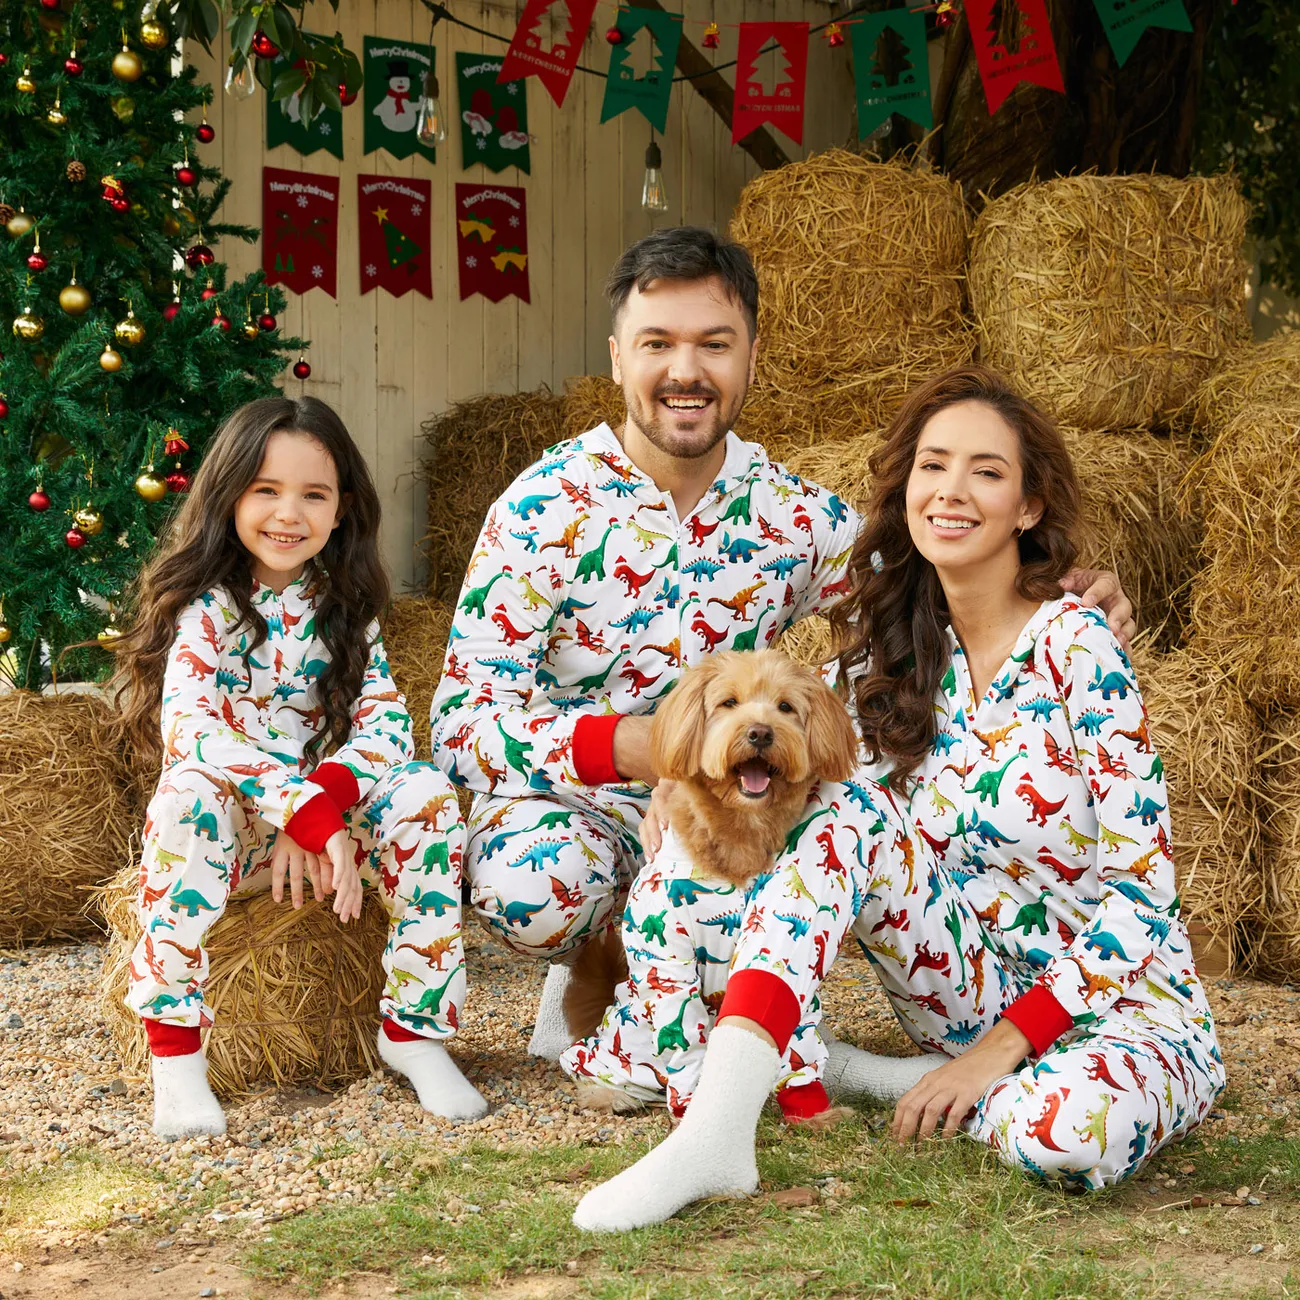 Christmas Dinosaur Print Family Matching Long-sleeve Hooded Onesies Pajamas Sets (Flame Resistant) Multi-color big image 1